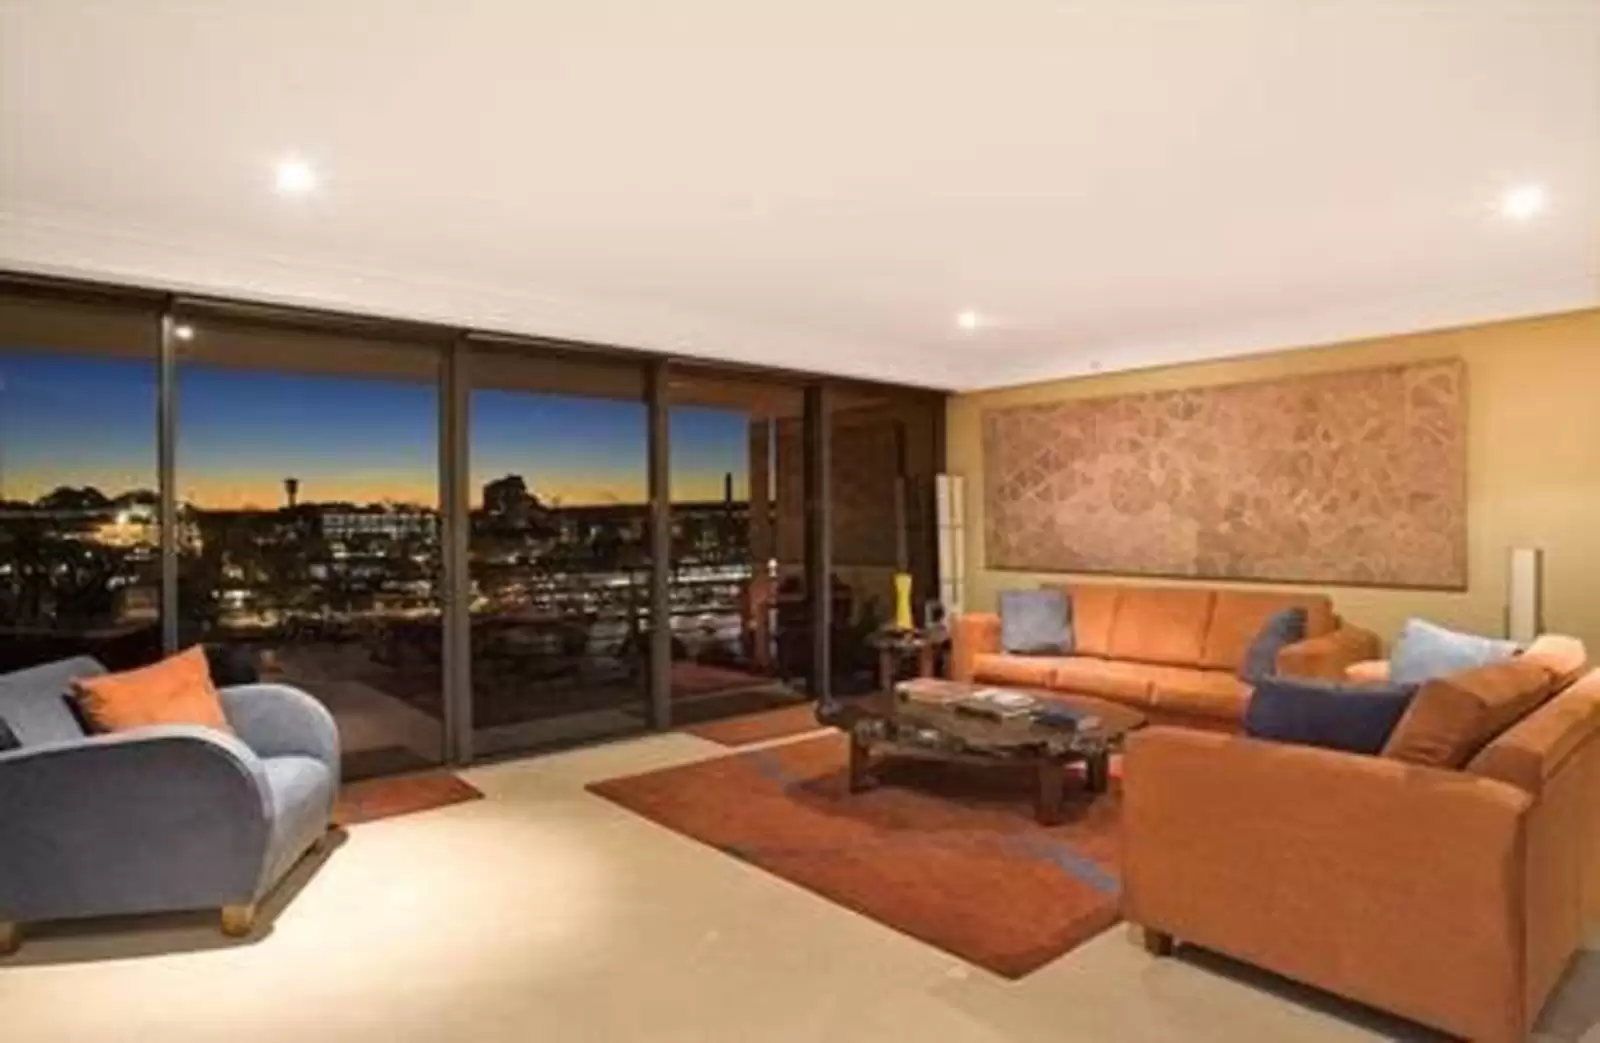 7 Macquarie Street, 'The Bennelong', Residence 96, Sydney Sold by Sydney Sotheby's International Realty - image 4